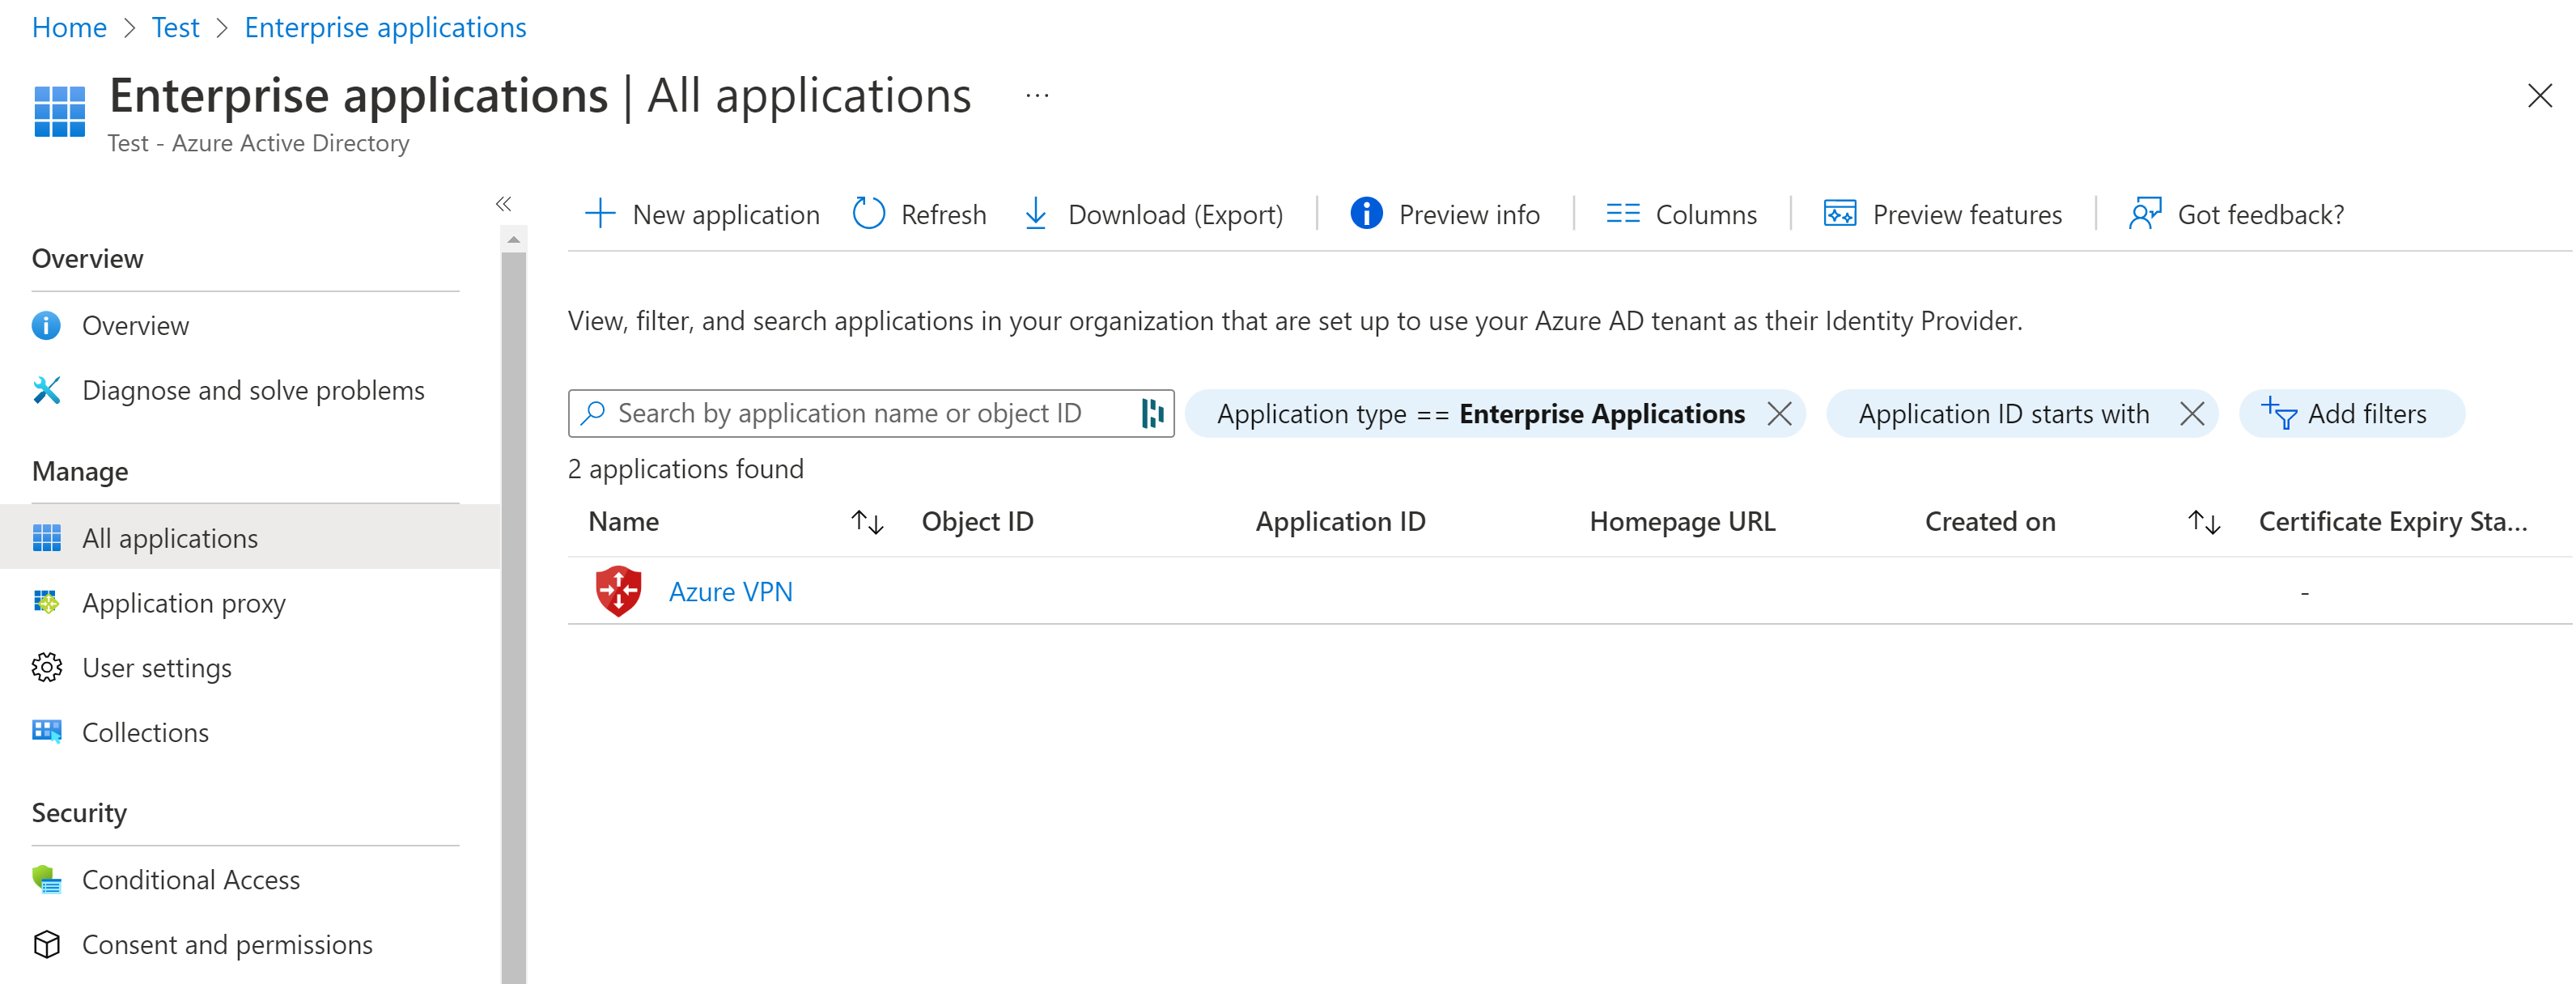 Screenshot of the Enterprise application page showing Azure V P N listed.